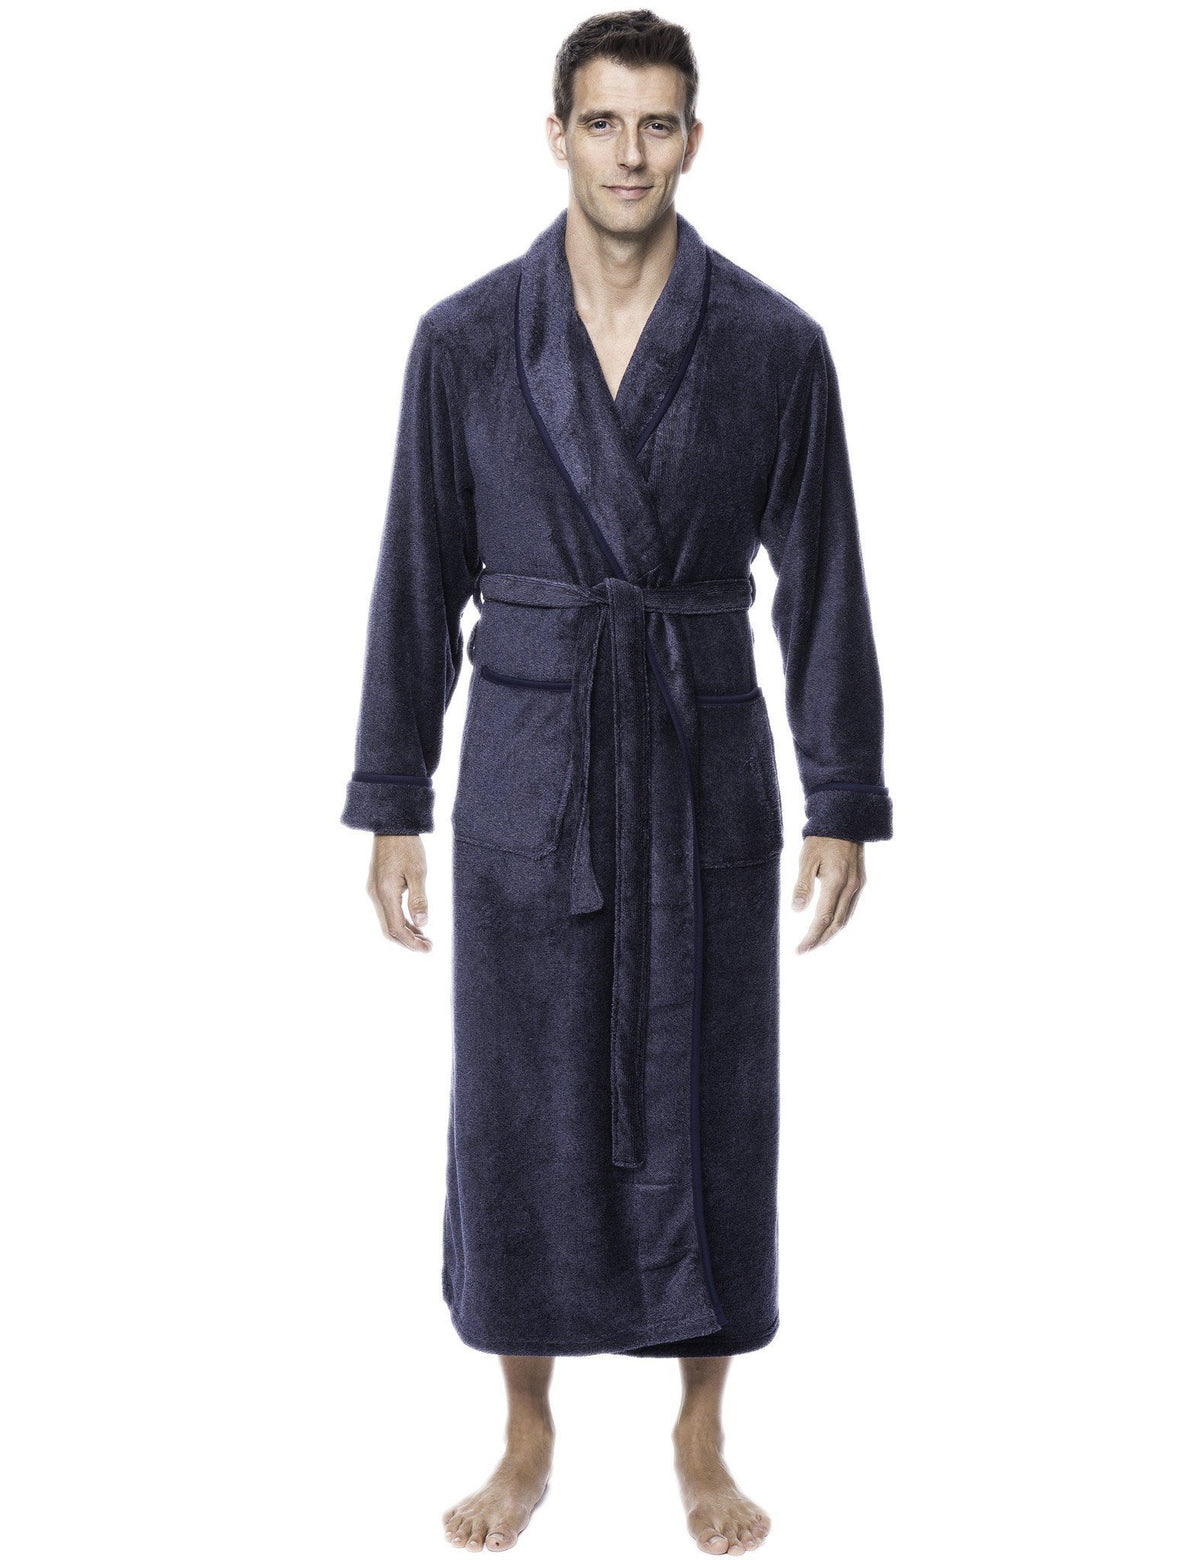 Men's Premium Coral Fleece Full Length Plush Spa/Bath Robe - Marl Navy/Grey